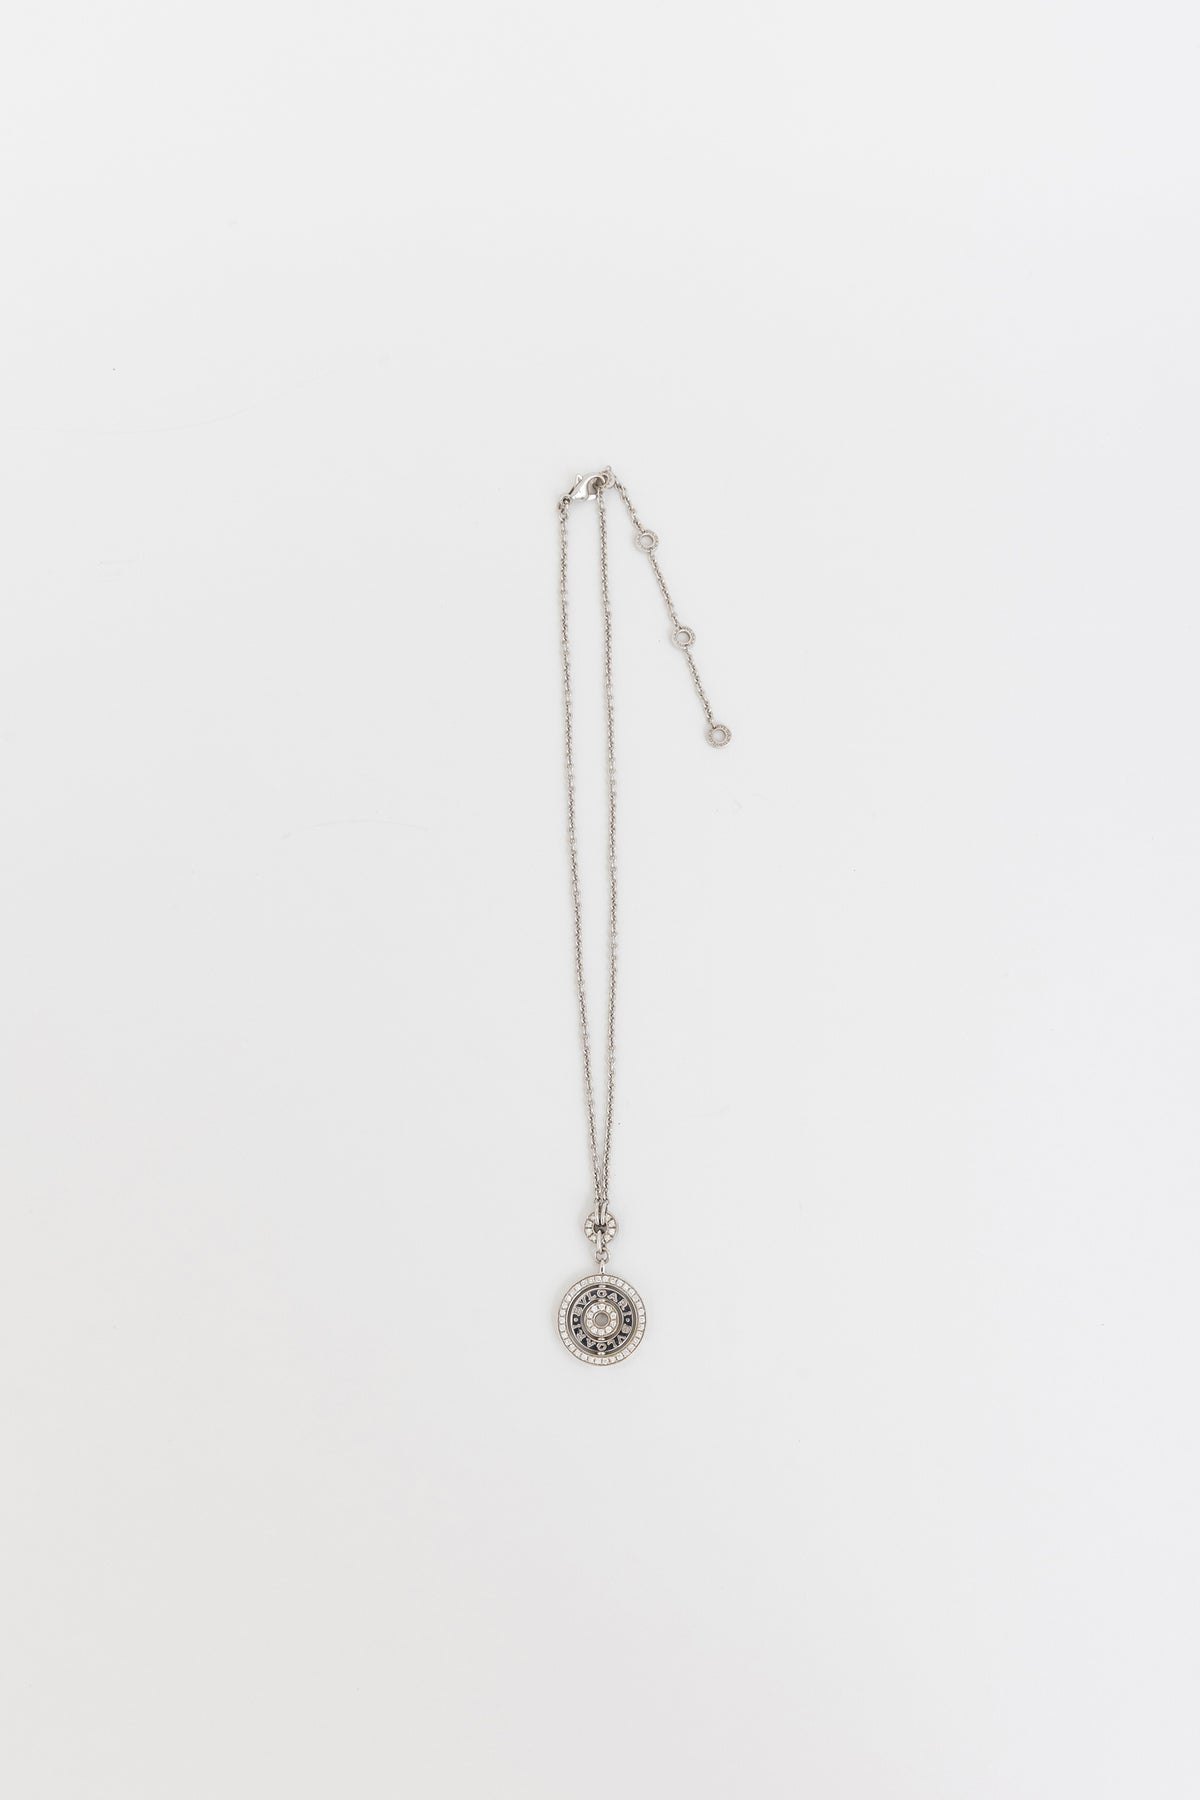 Astrale Cerchi Diamond Pendant Necklace